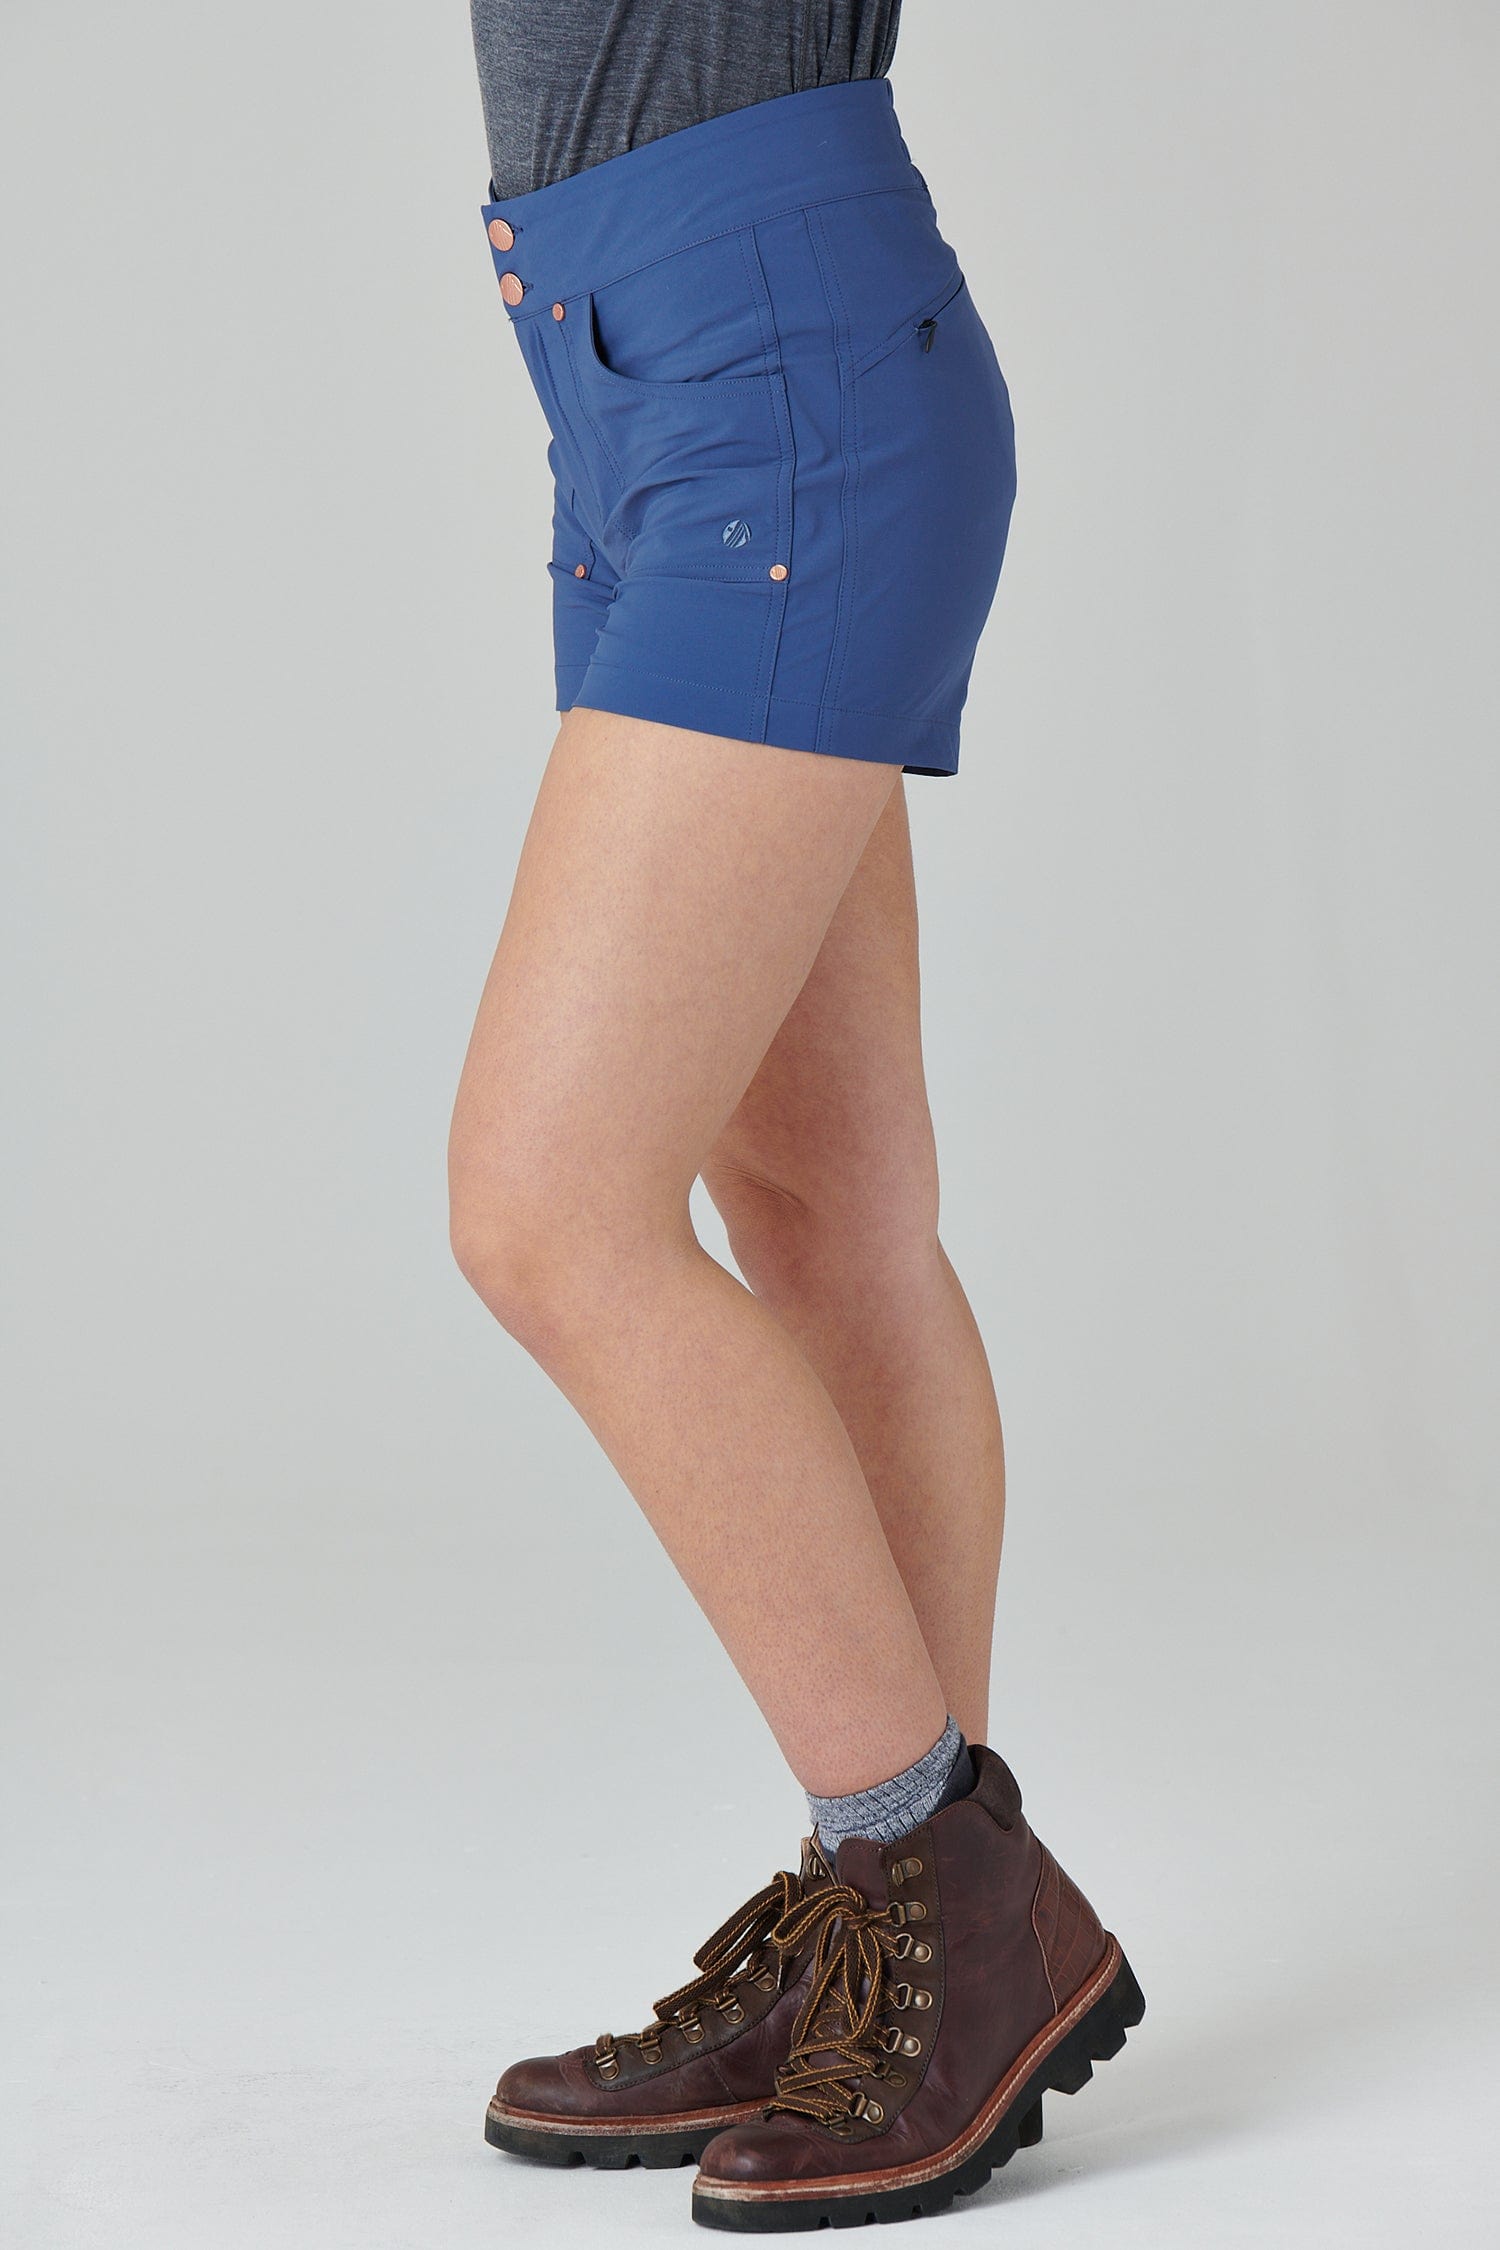 Trek Shorts - Steel Blue - 32 / Uk14 - Womens - Acai Outdoorwear